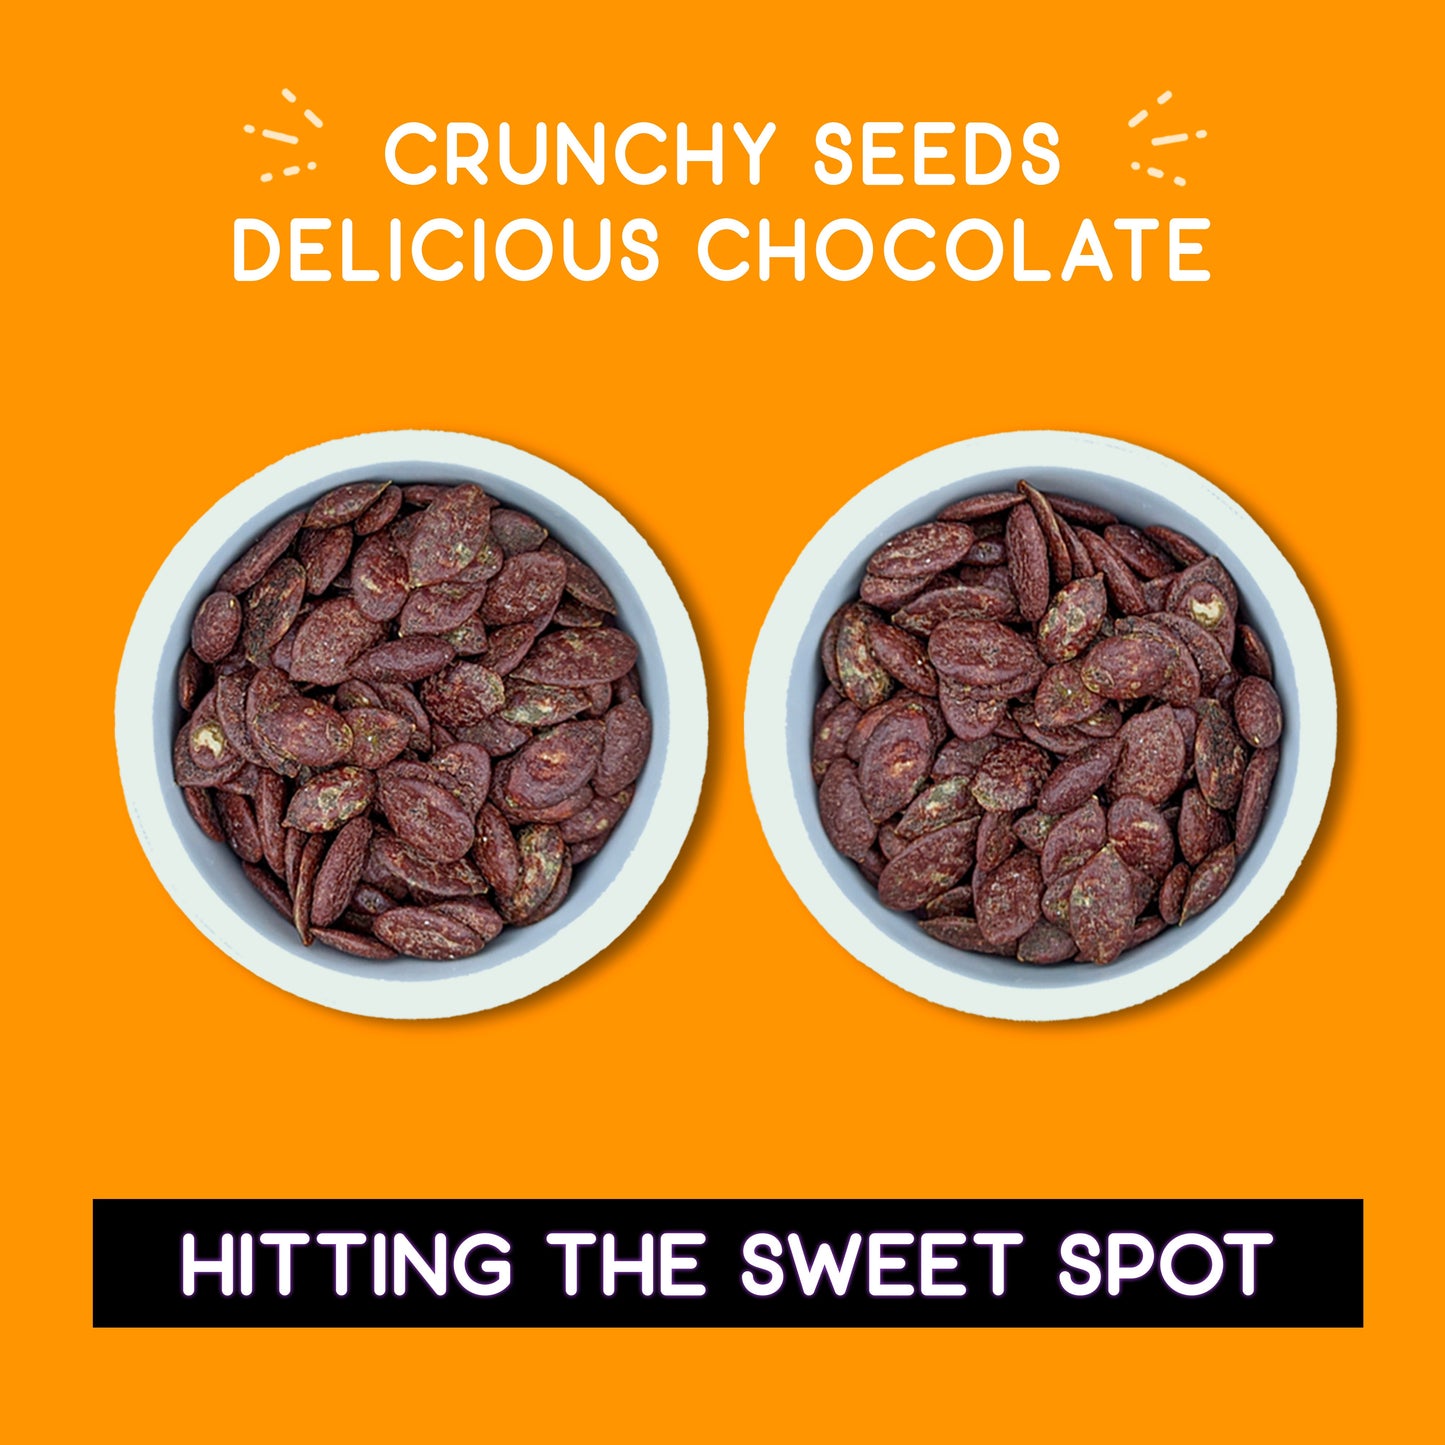 12-Pack Nutrilicious Crunchy Pumpkin Seeds - Chocolate Variety Pack